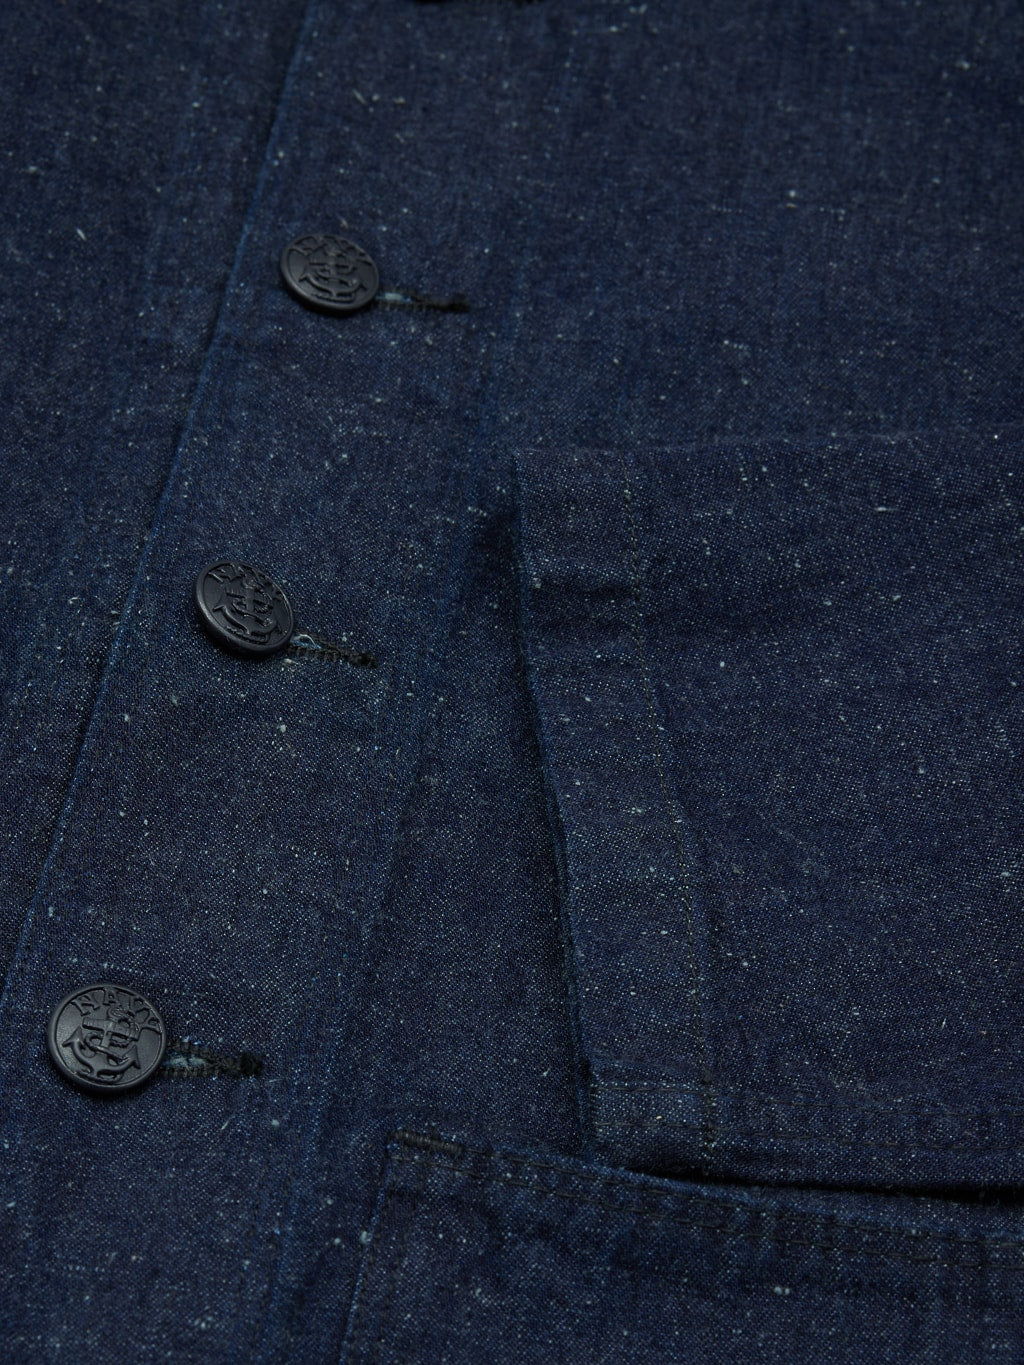 tcb usn vintage navy seamens jacket cotton fabric